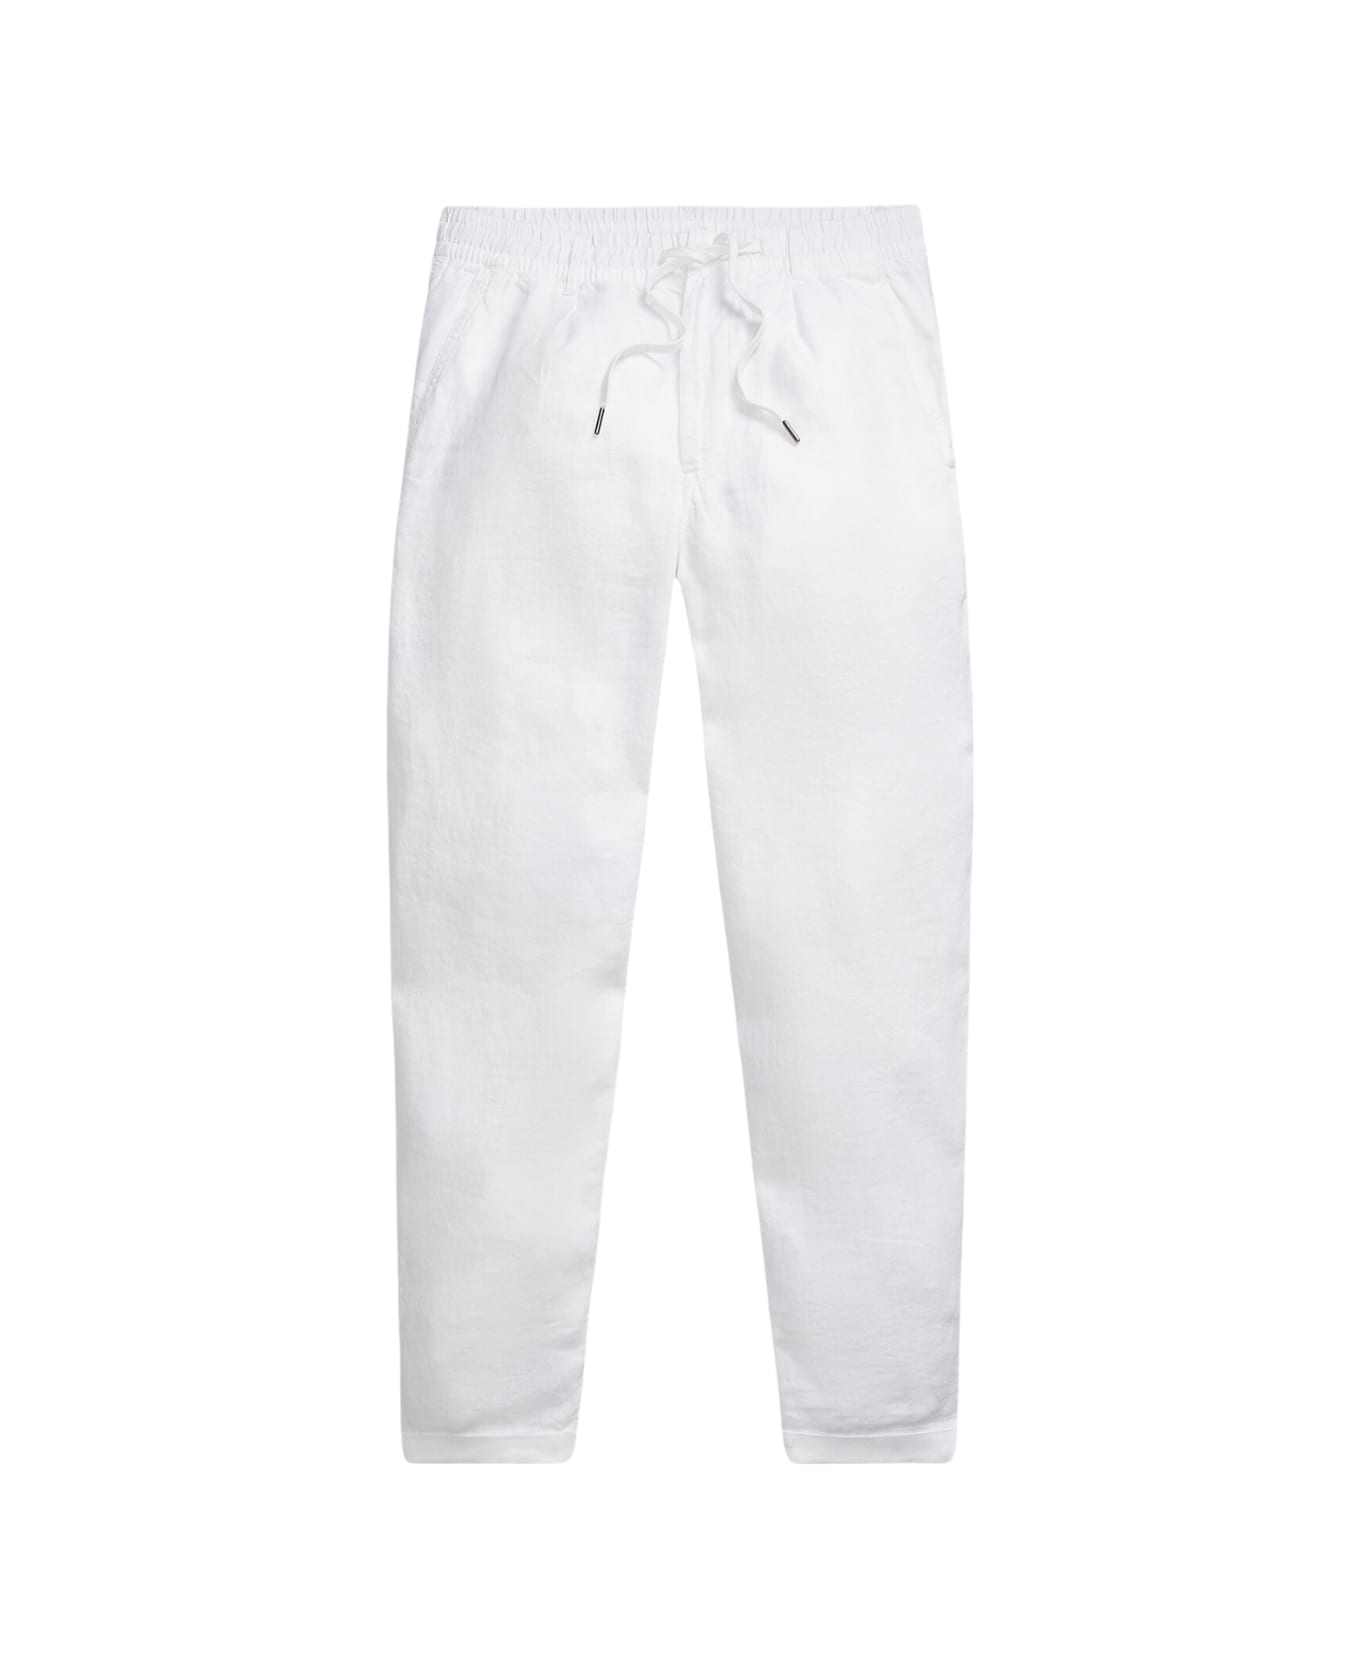 Polo Ralph Lauren Athletic Pants - Ceramic White